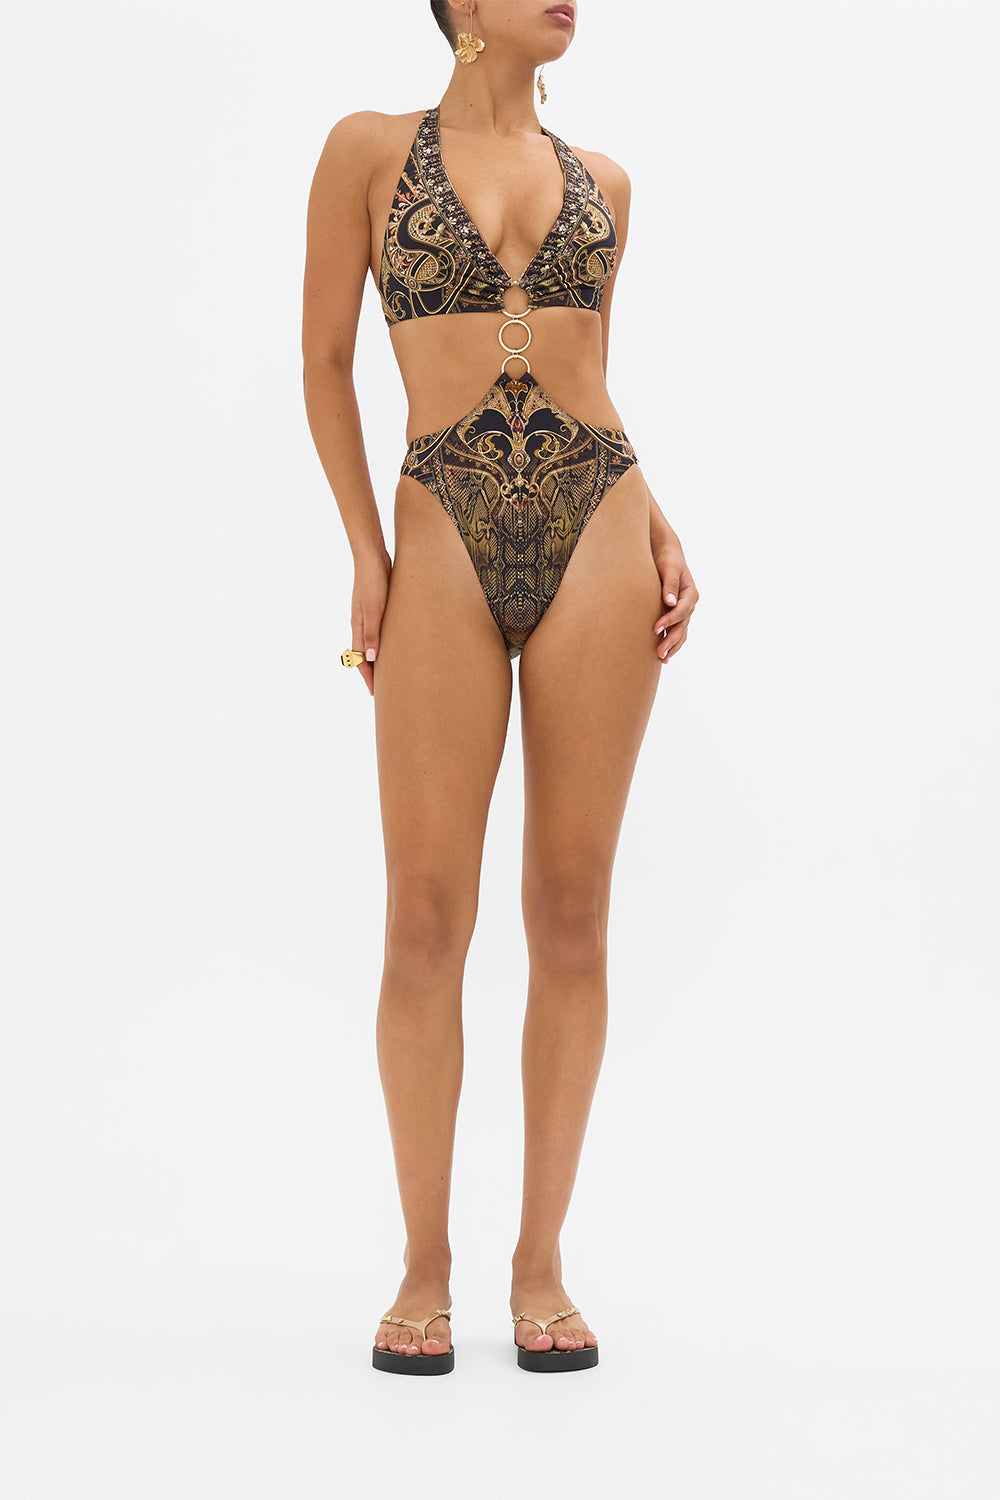 CAMILLA resortwear onepiece swimsuit in Nouveau Noir print